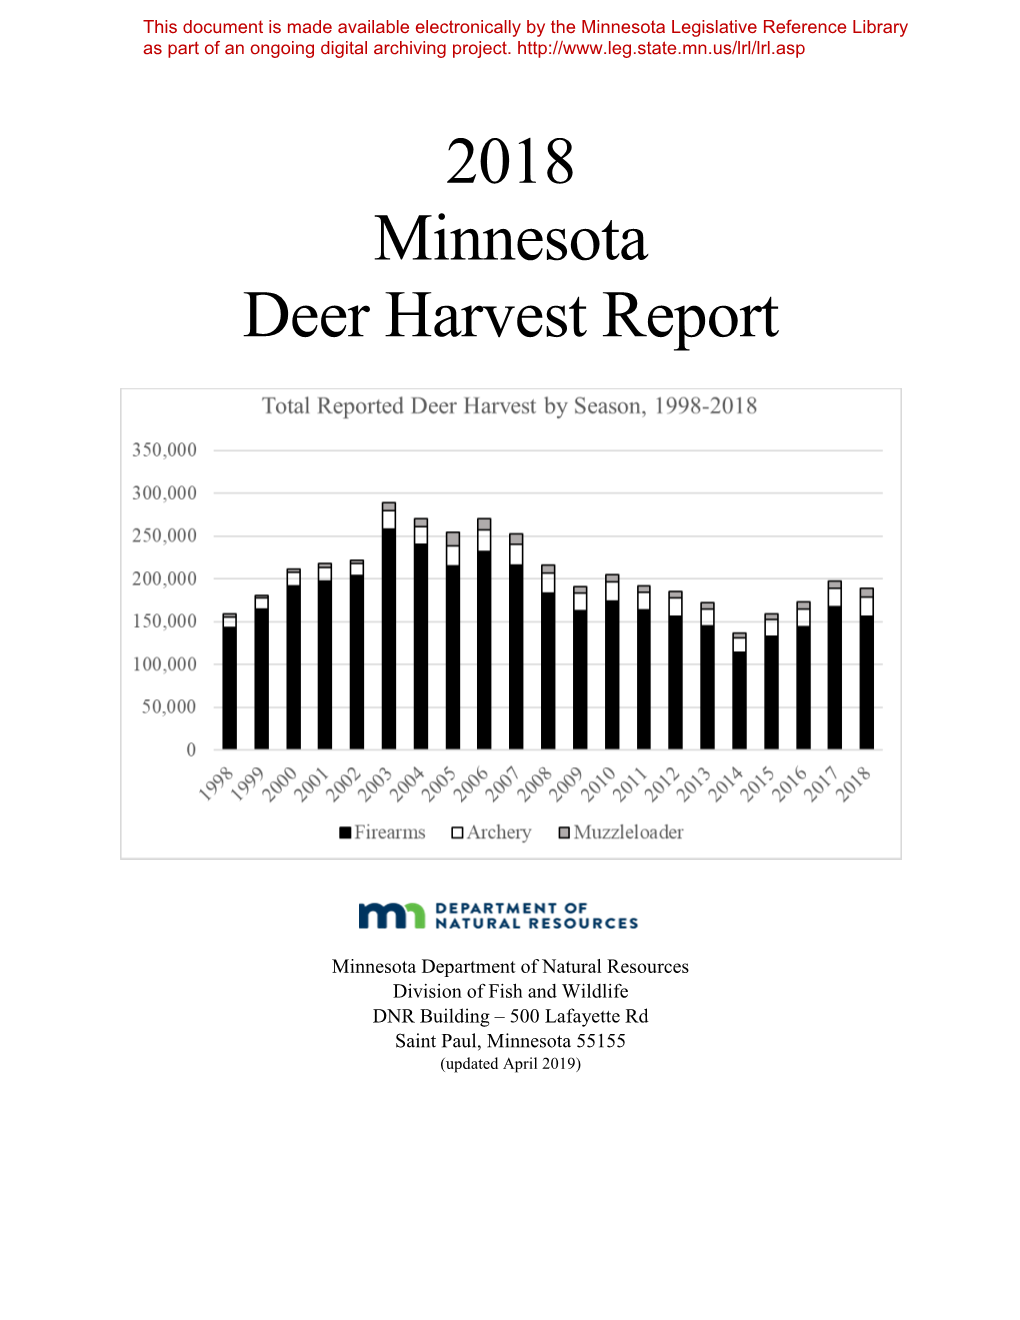 2018 Minnesota Deer Harvest Report